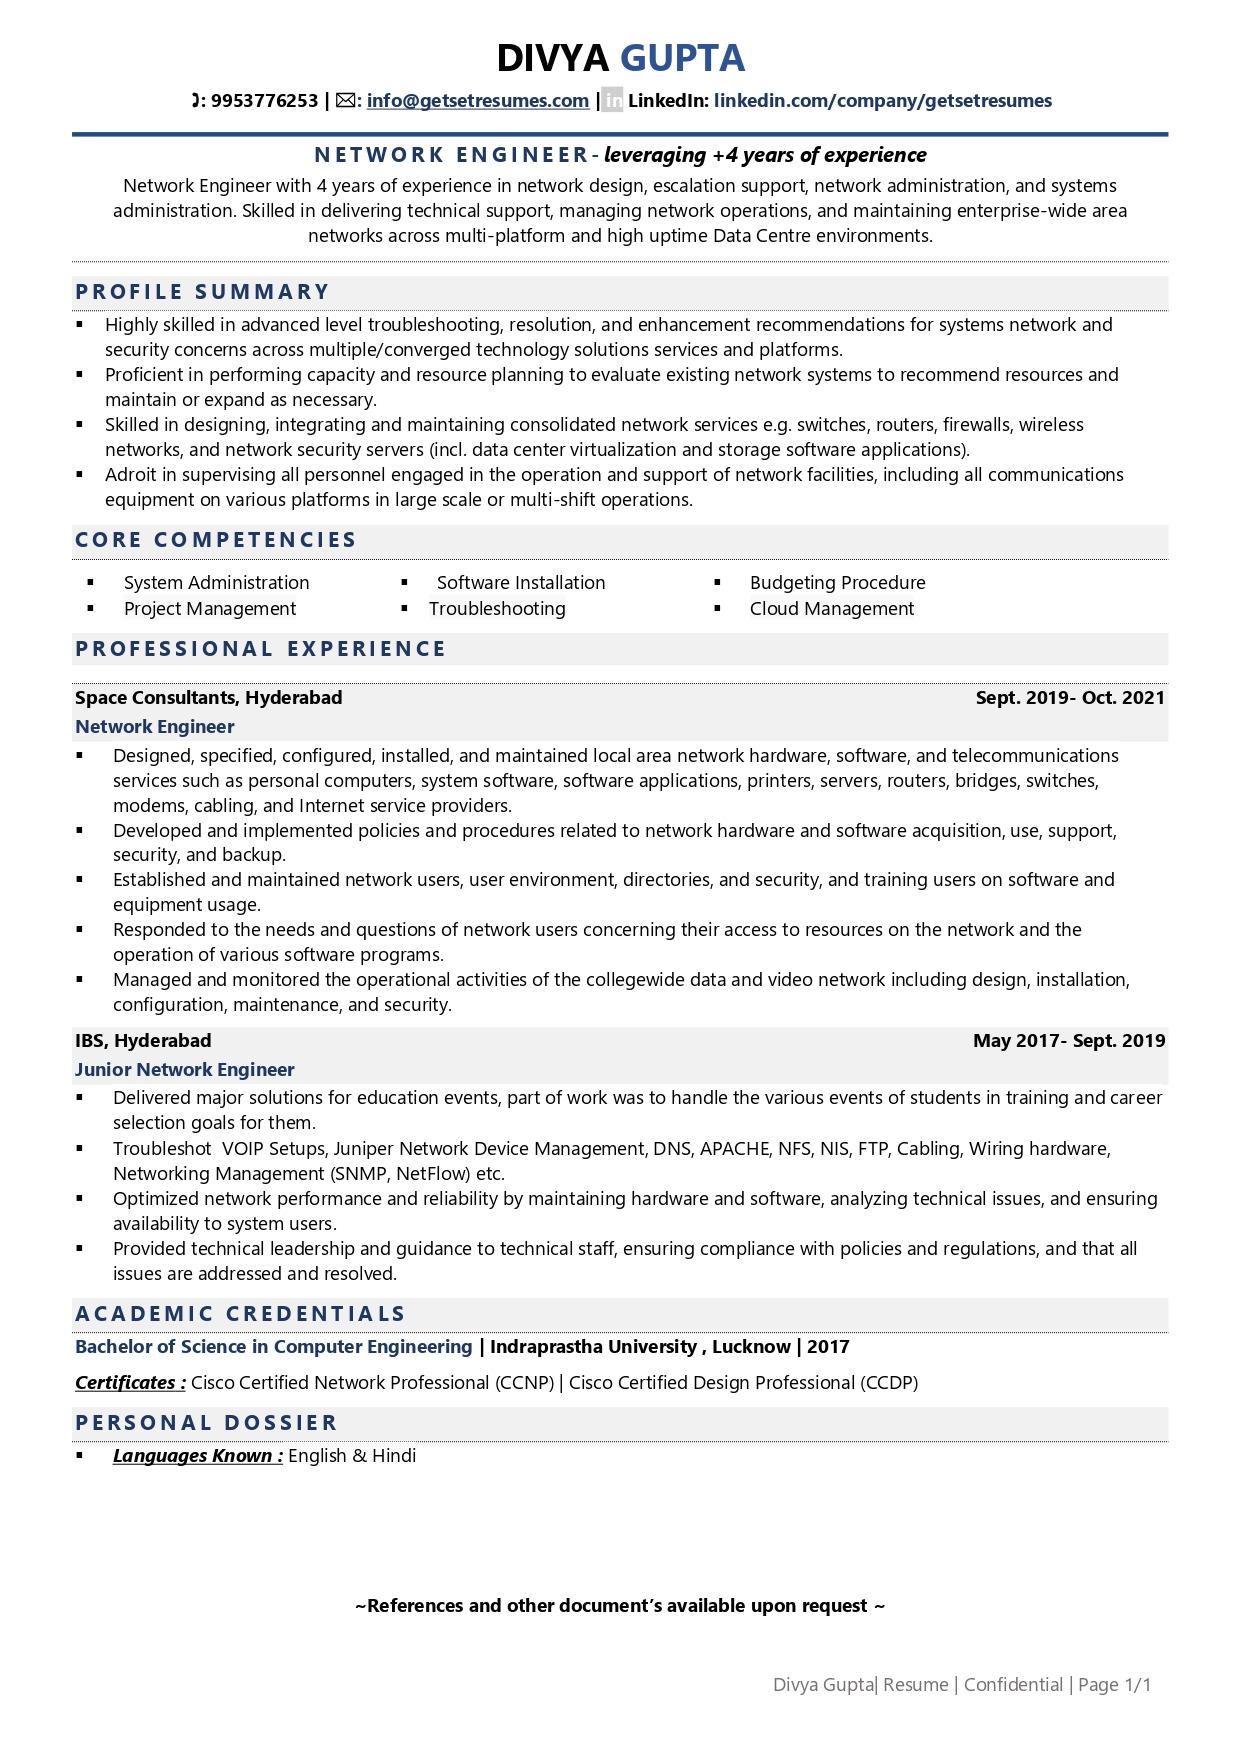 Network Administrator / Engineer - Resume Example & Template